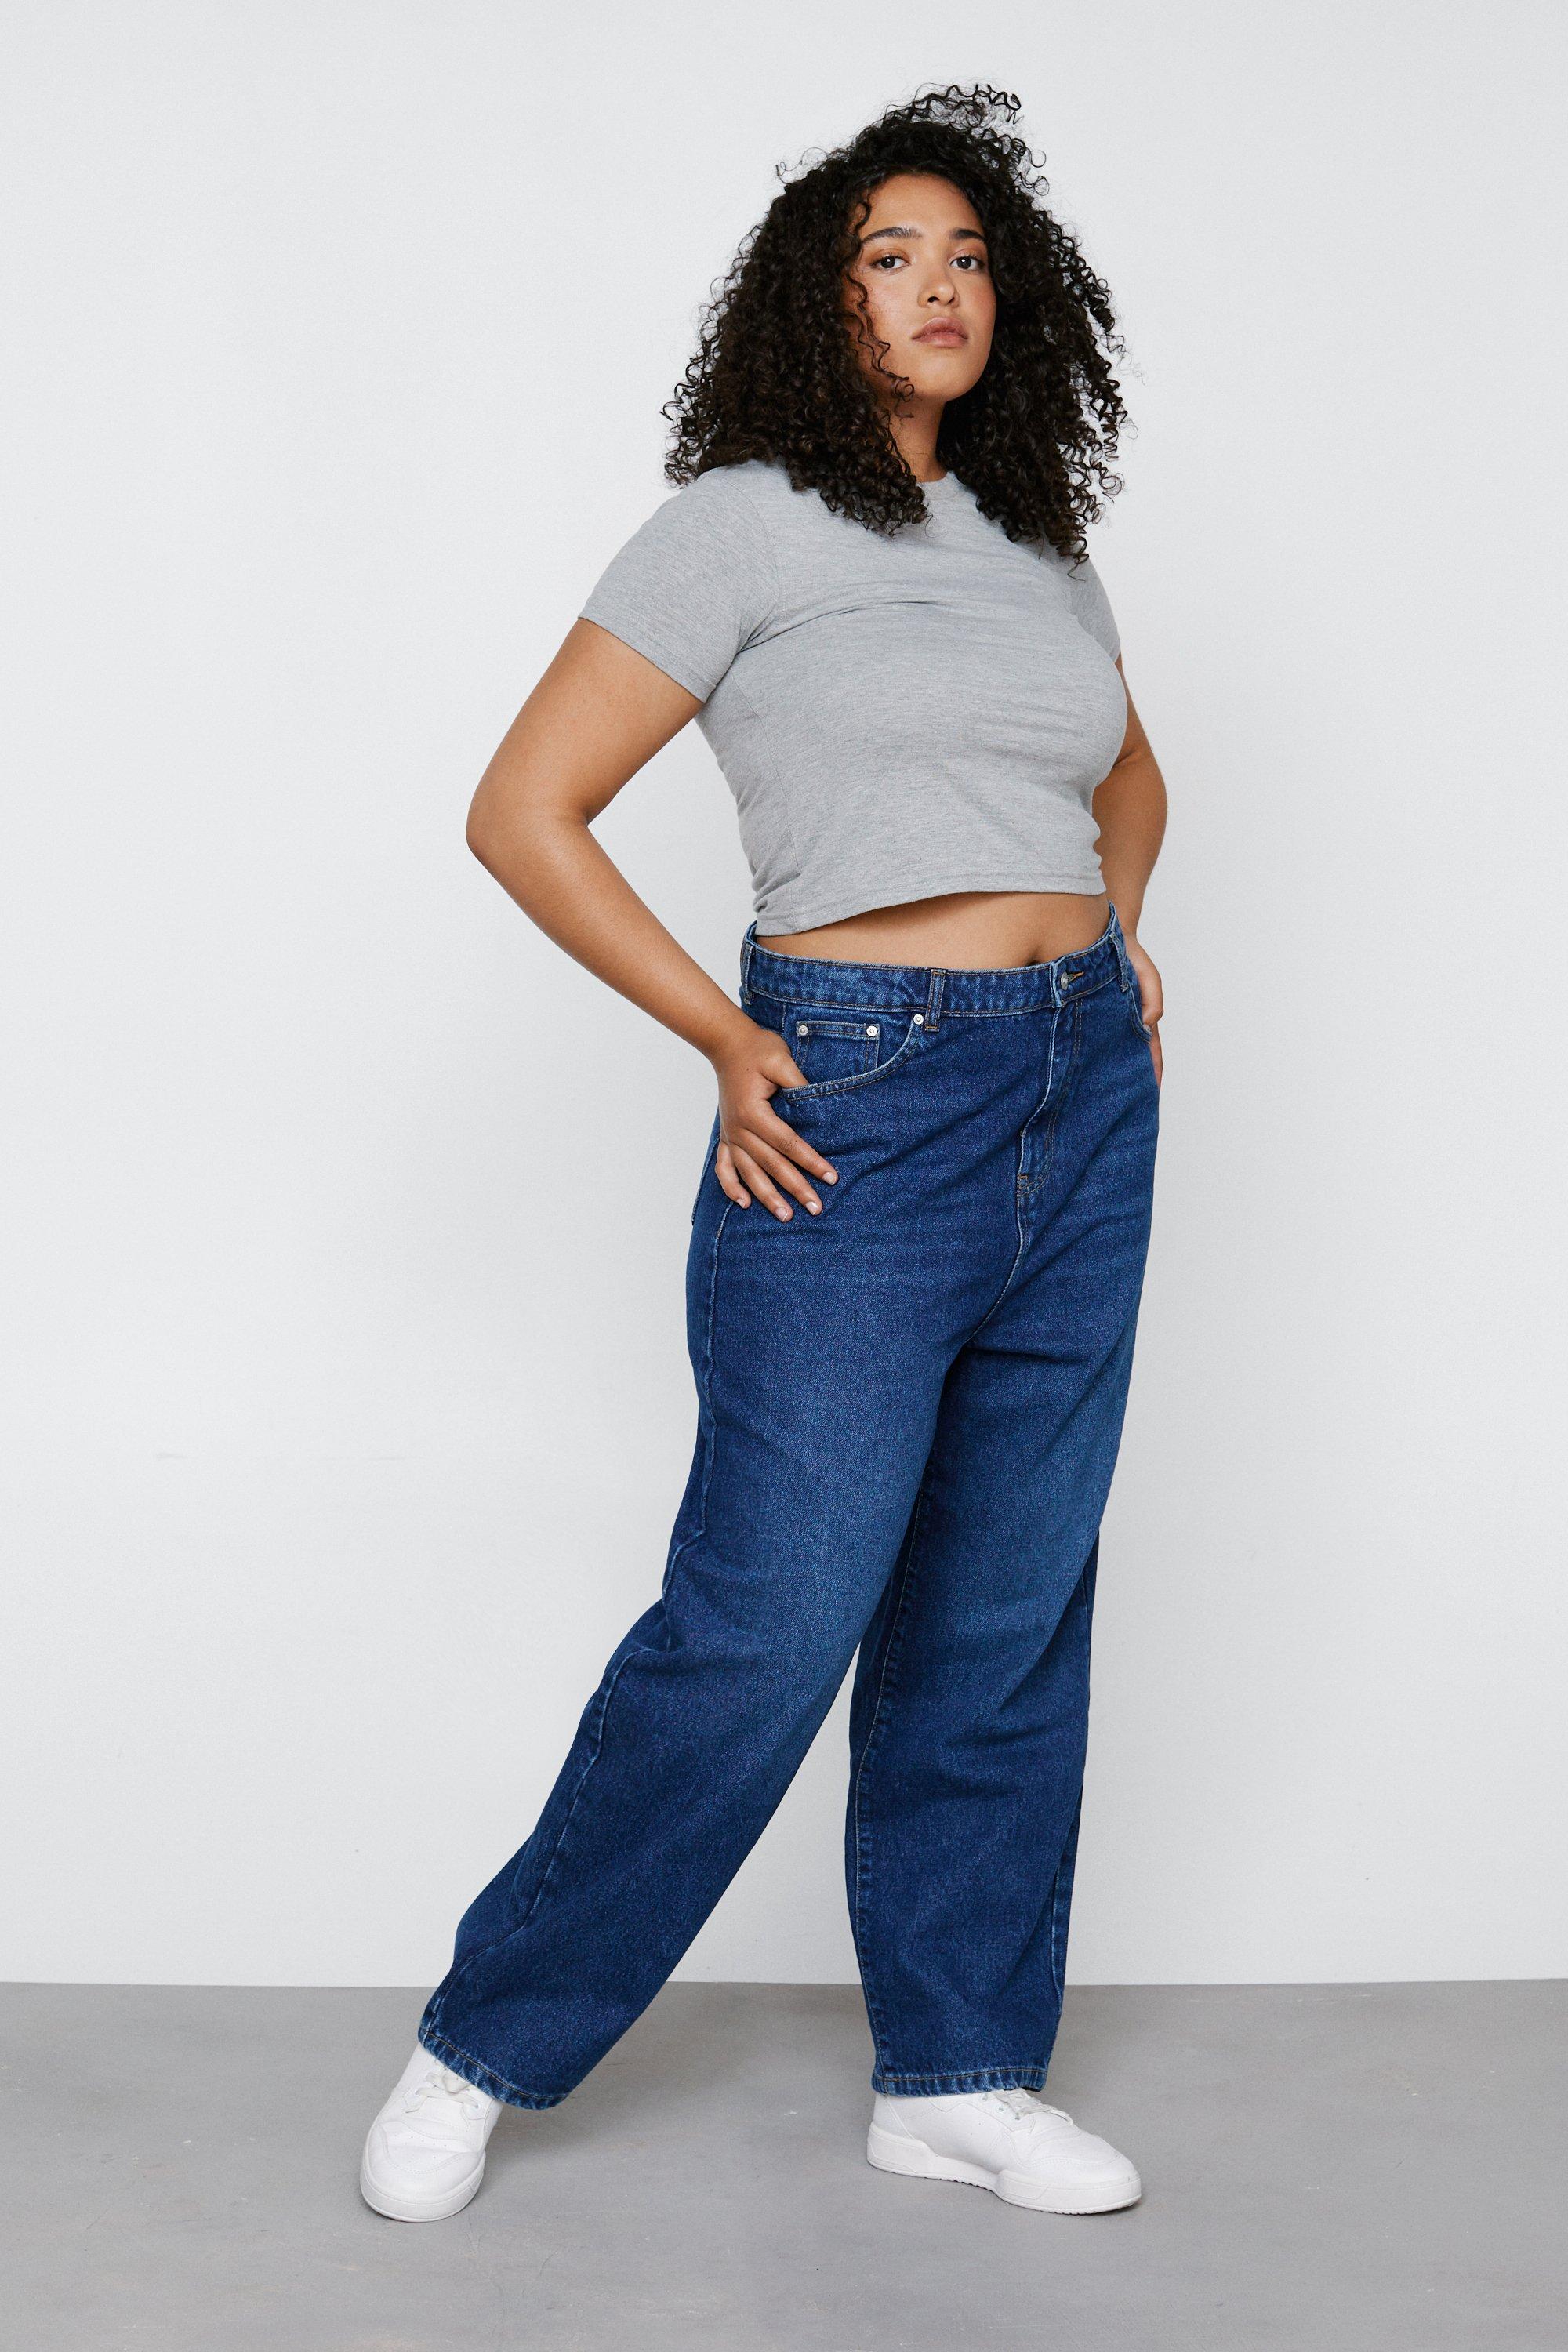 Nasty Gal Womens Plus Size Organic Denim Mom Jeans - ShopStyle